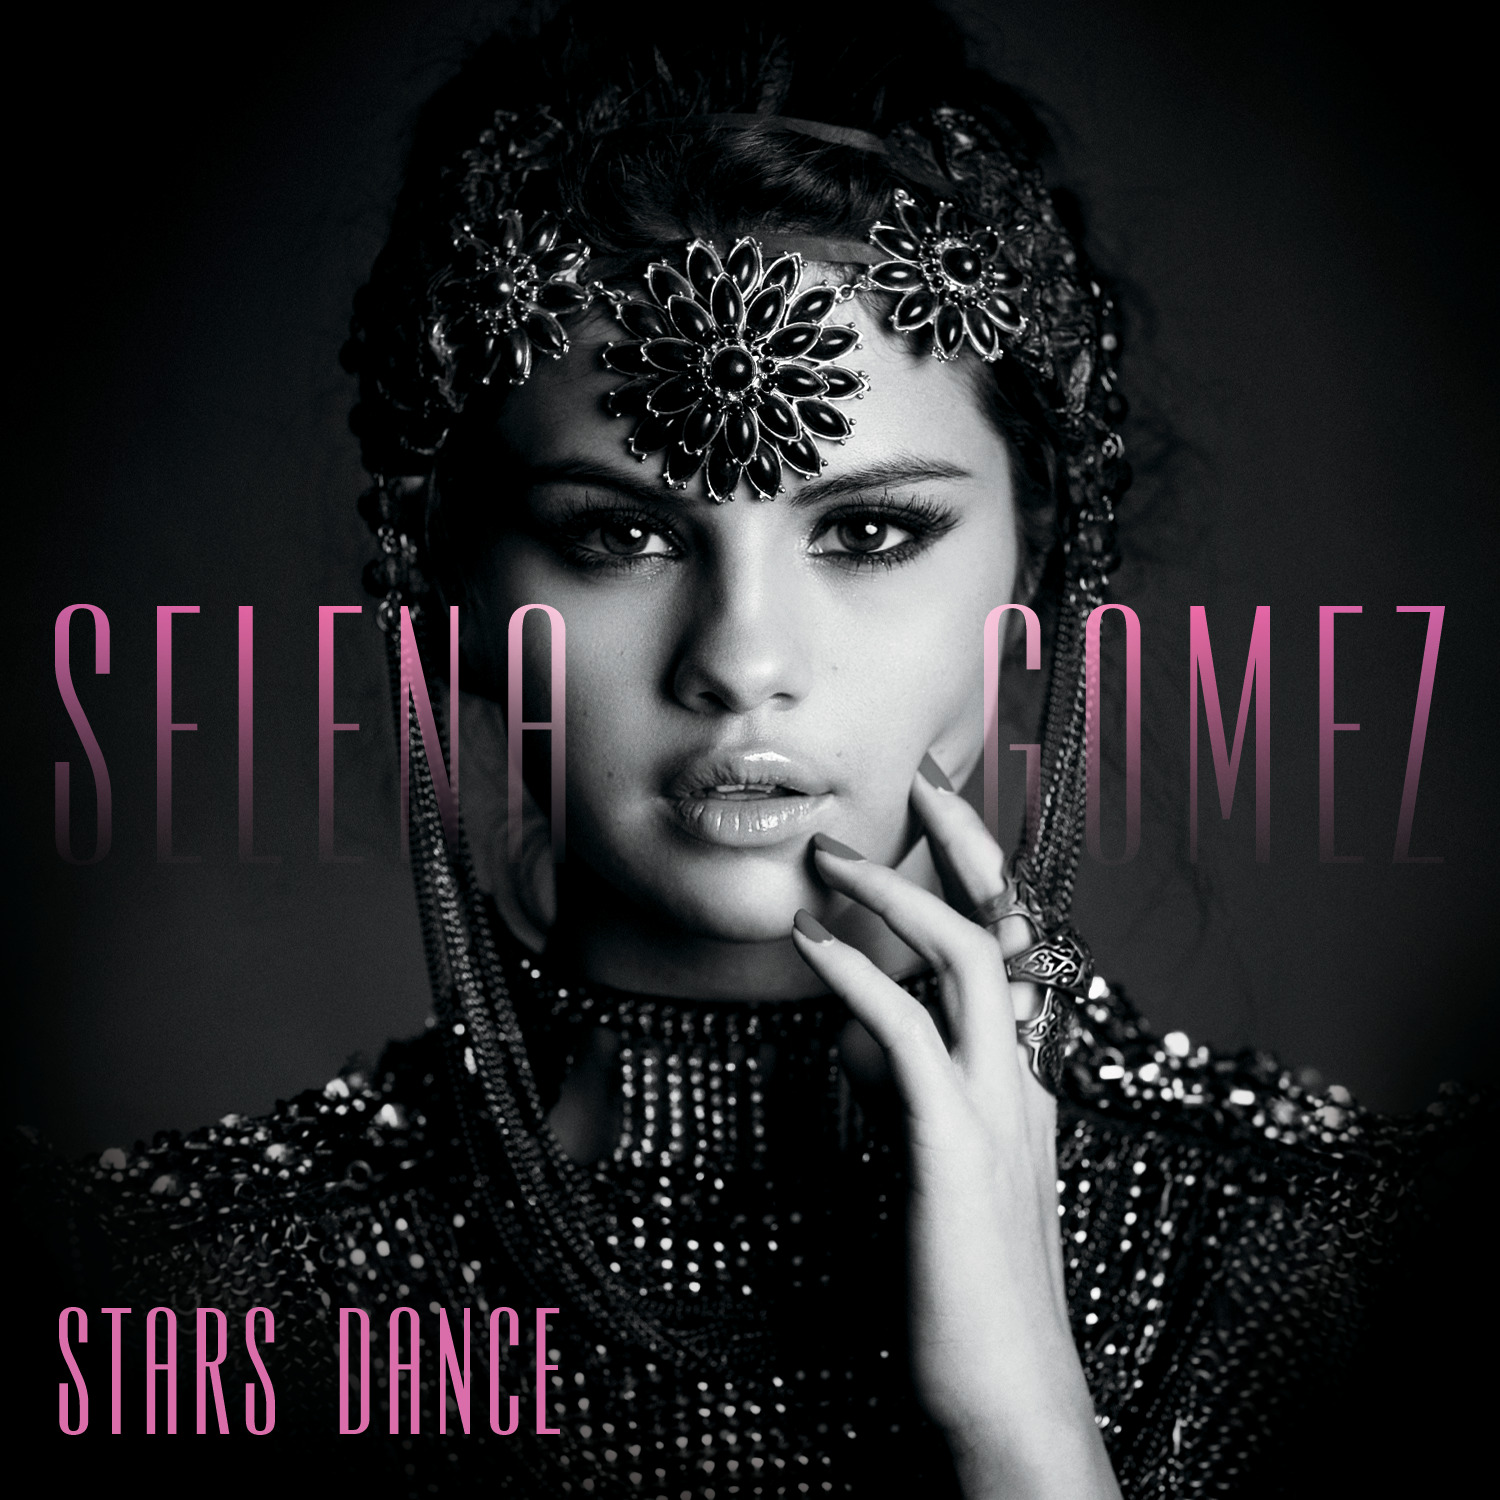 Selena Gomez - Another Cinderella Story - EP Lyrics and Tracklist